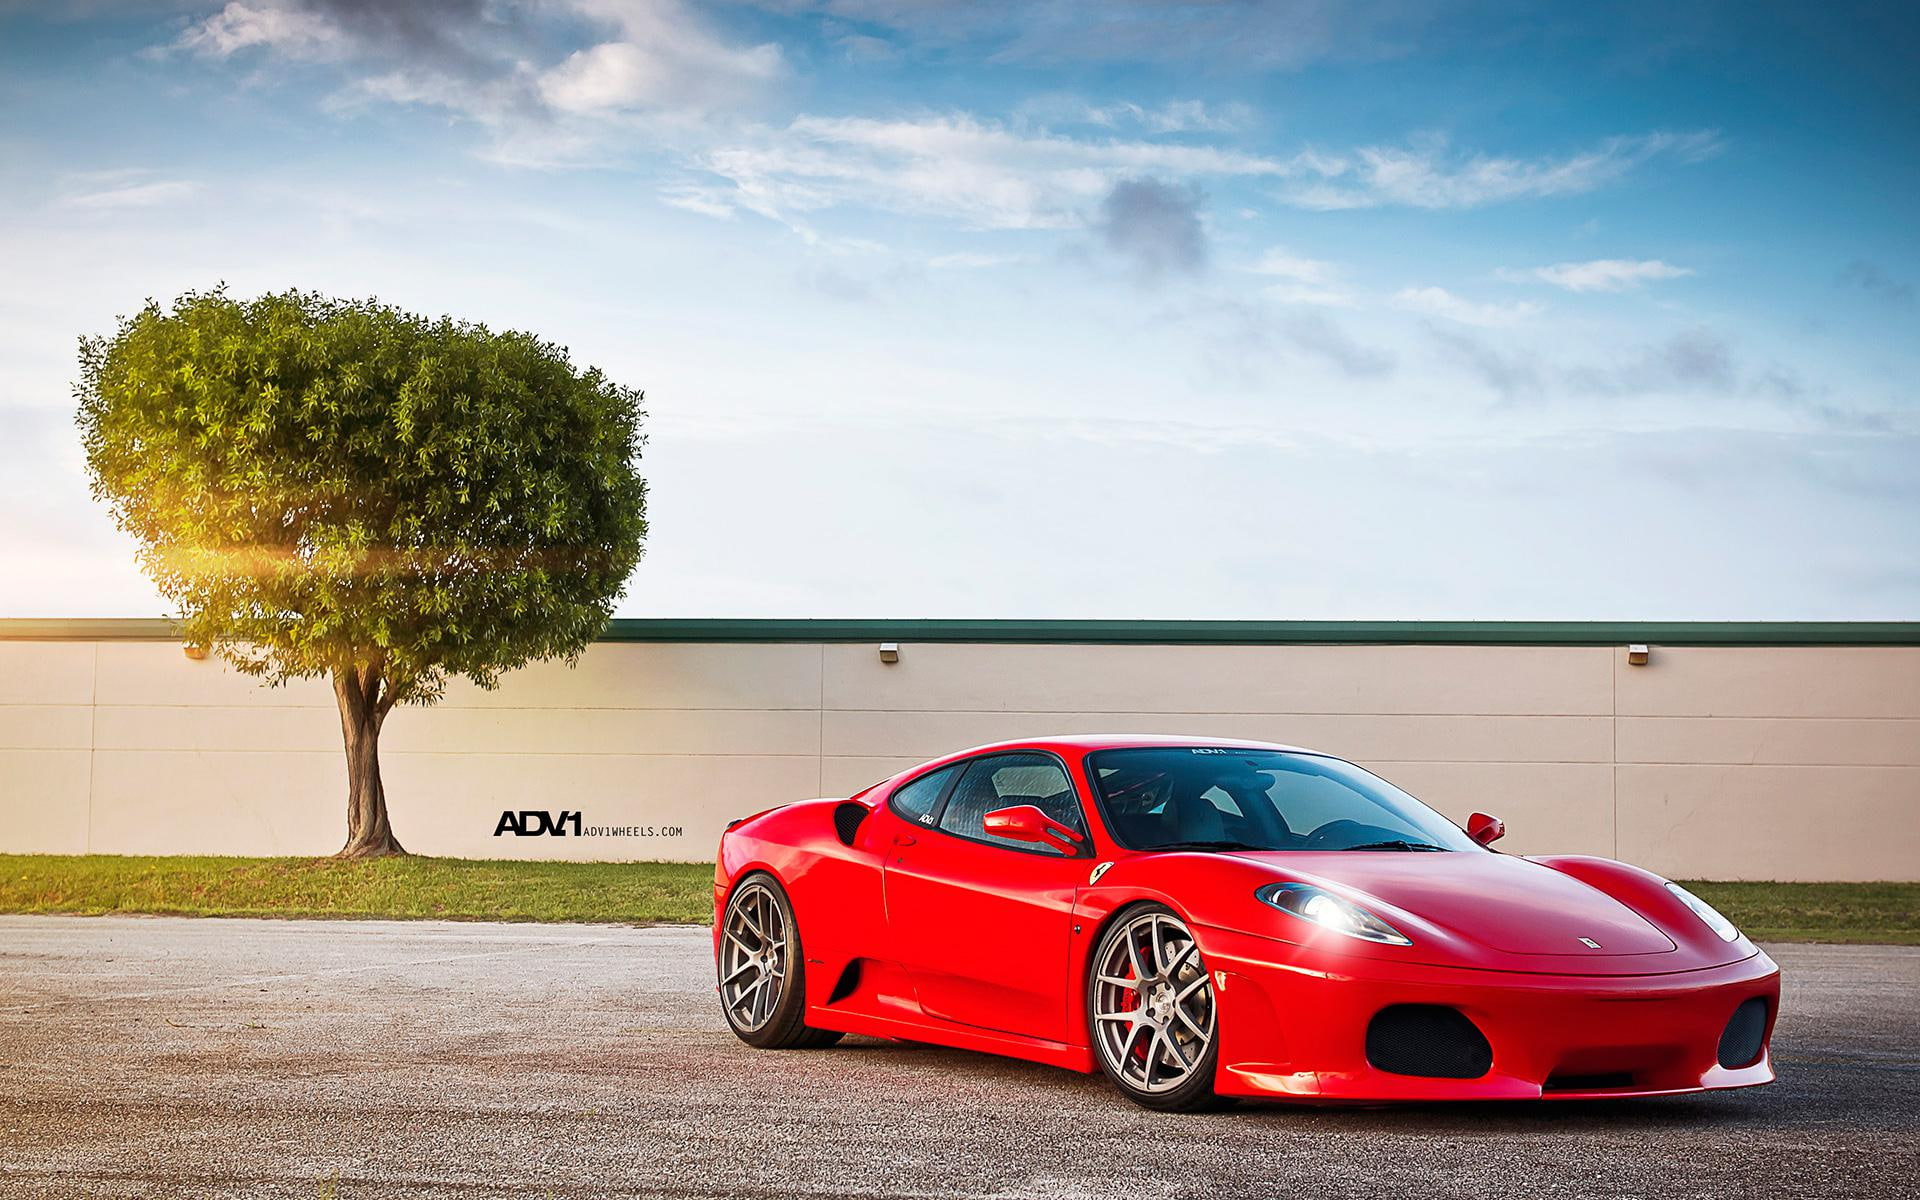 Ferrari F430 by ADV1, red ferrari f430, cars